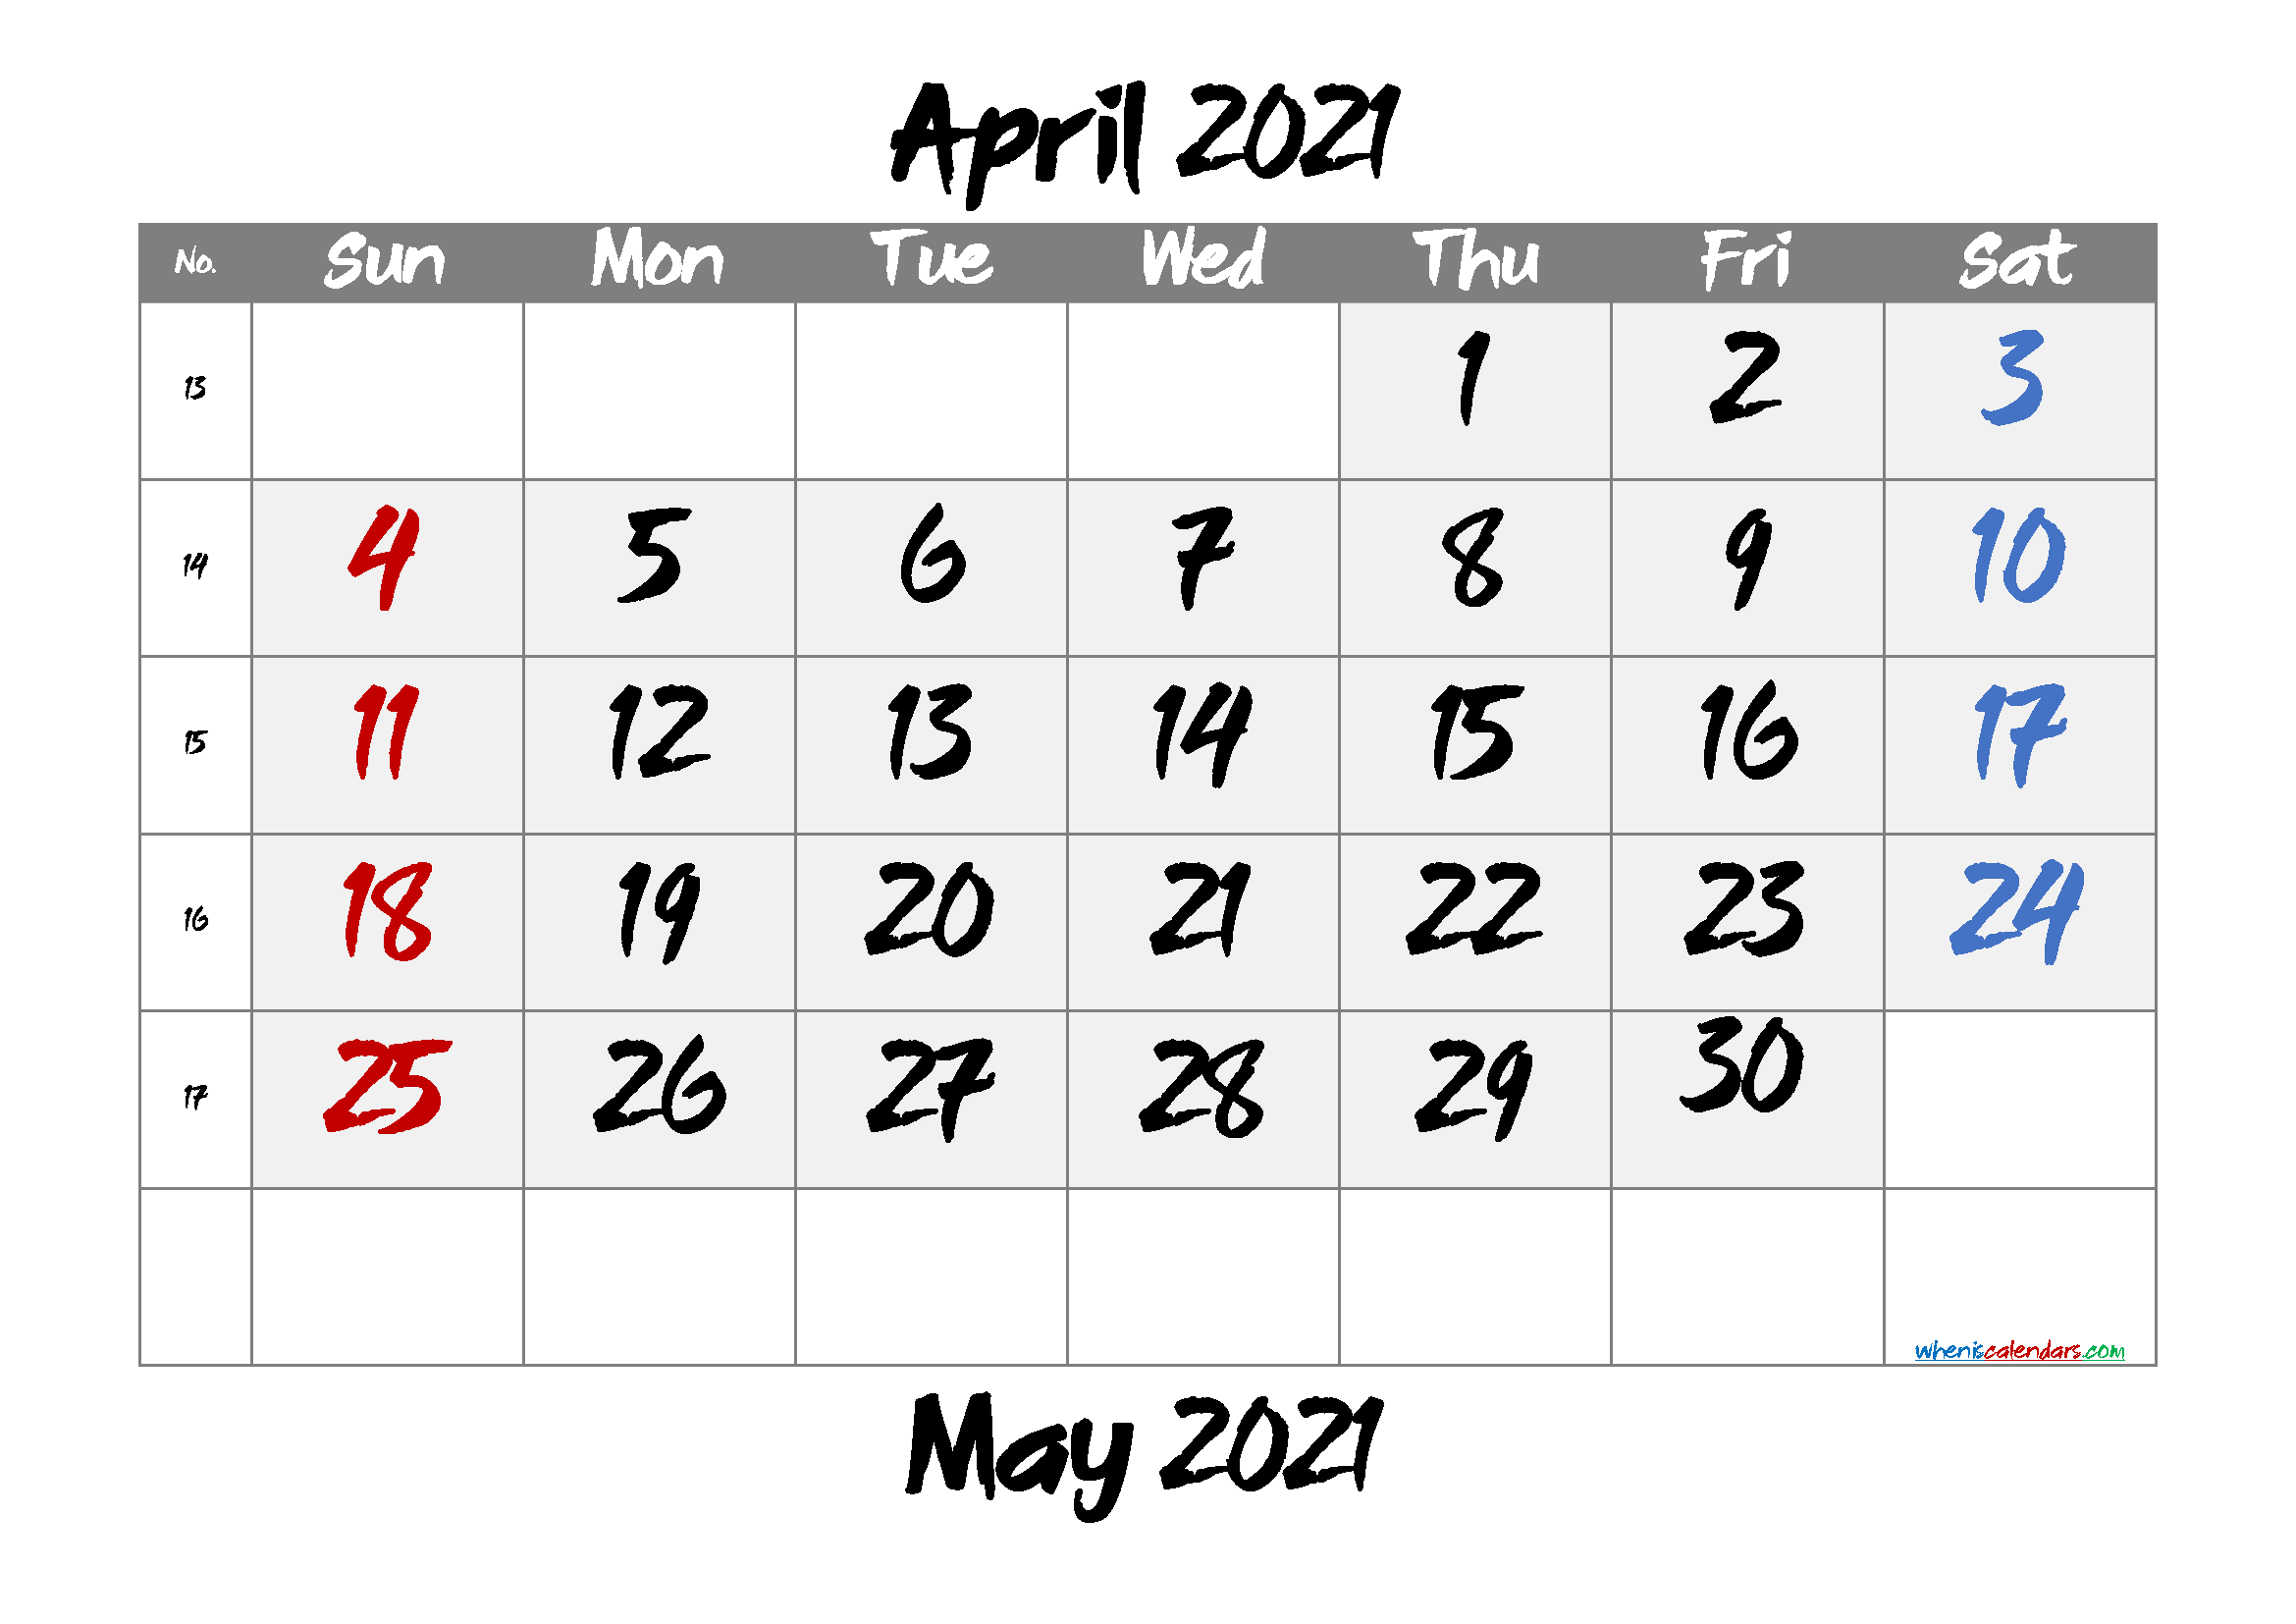 April 2021 Printable Calendar Free